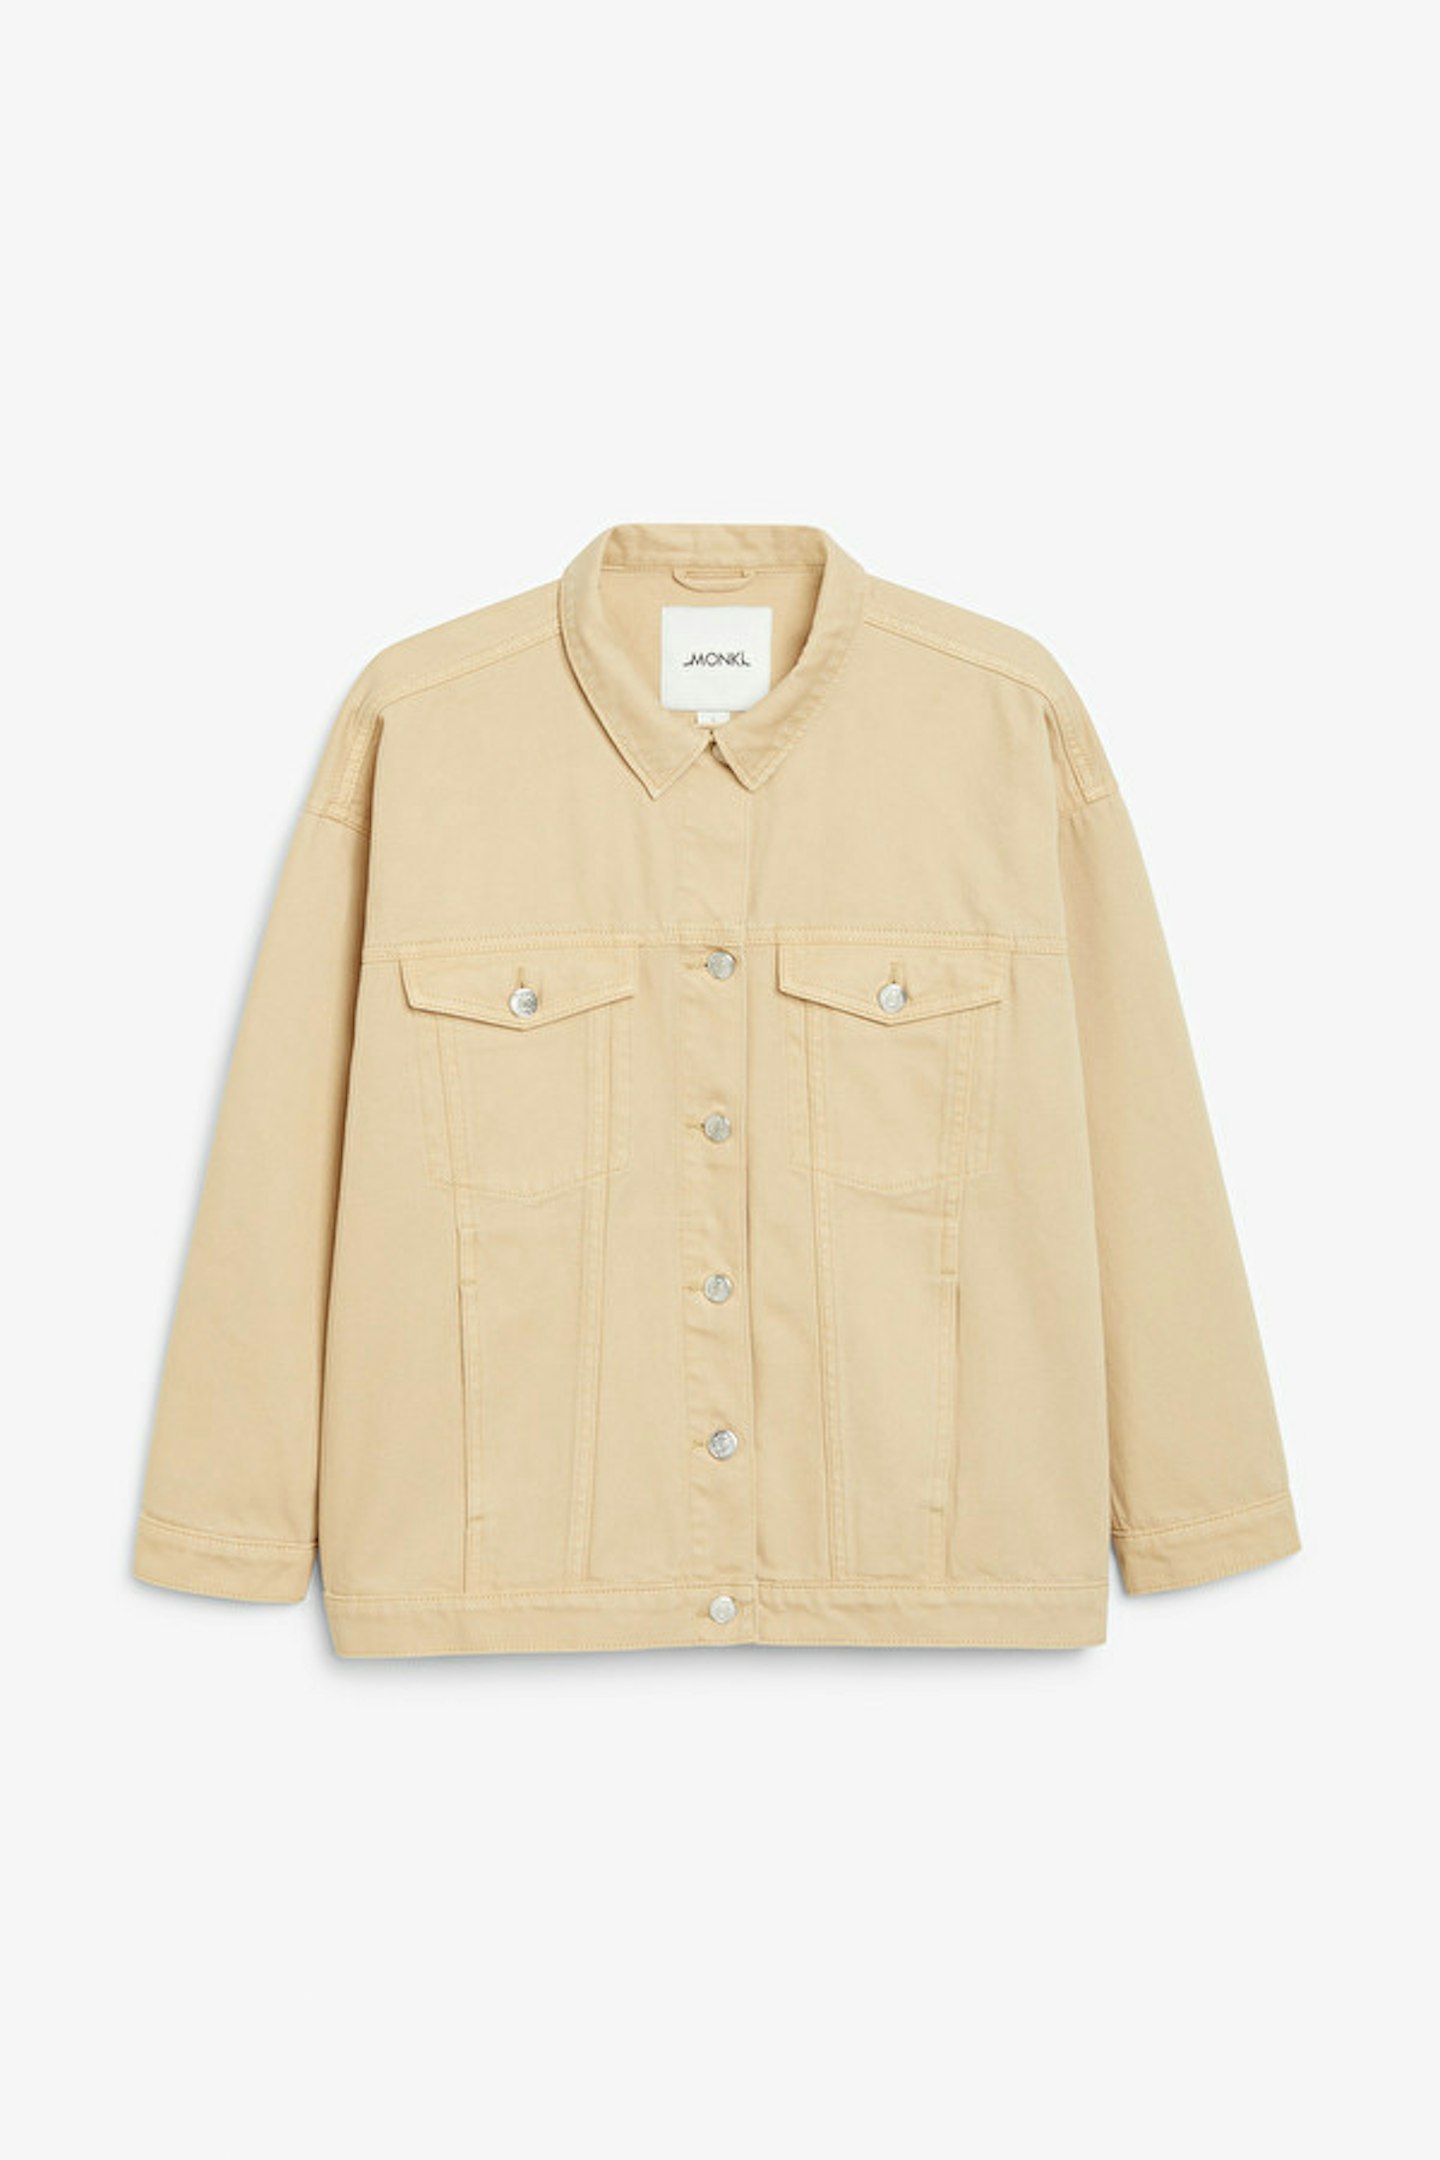 Monki, Classic denim jacket, £50